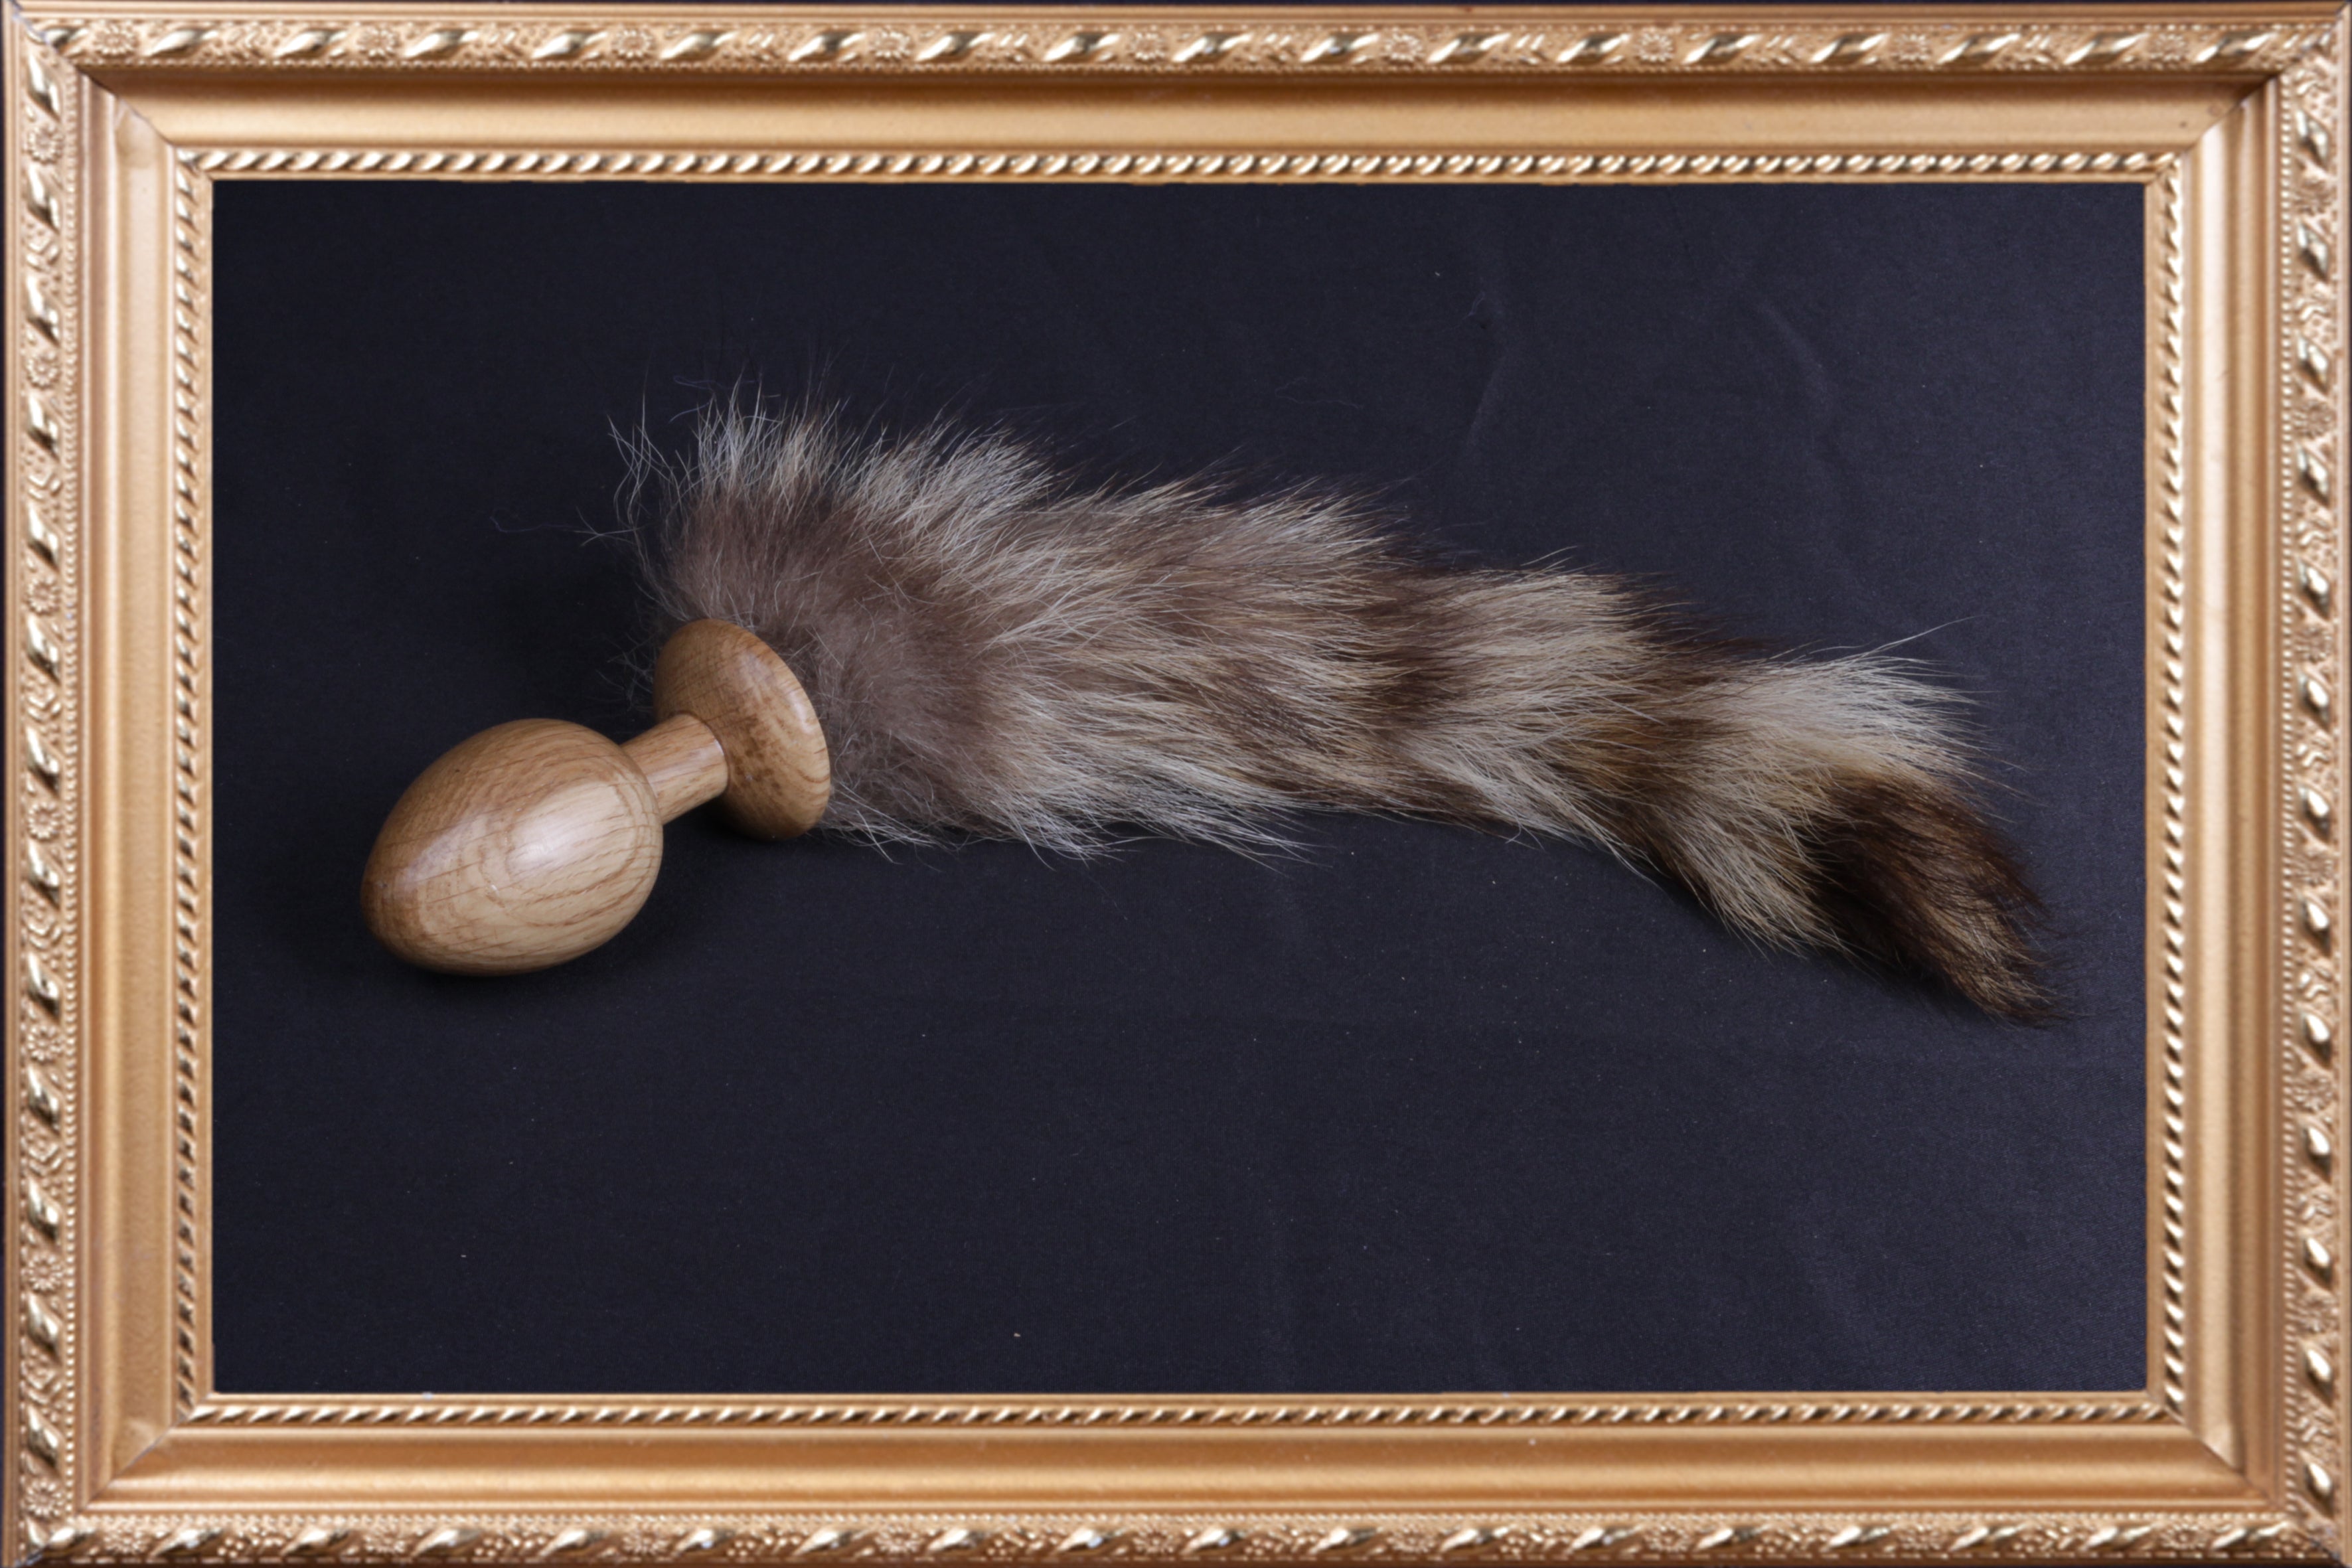 OACHKATZLSCHWOAF Eiche Waschbär || Wooden Furry Tail Anal Butt Plug Holz|| Fox Bunny Raccoon || Sex Toy || Handmade by Holz-Knecht.at